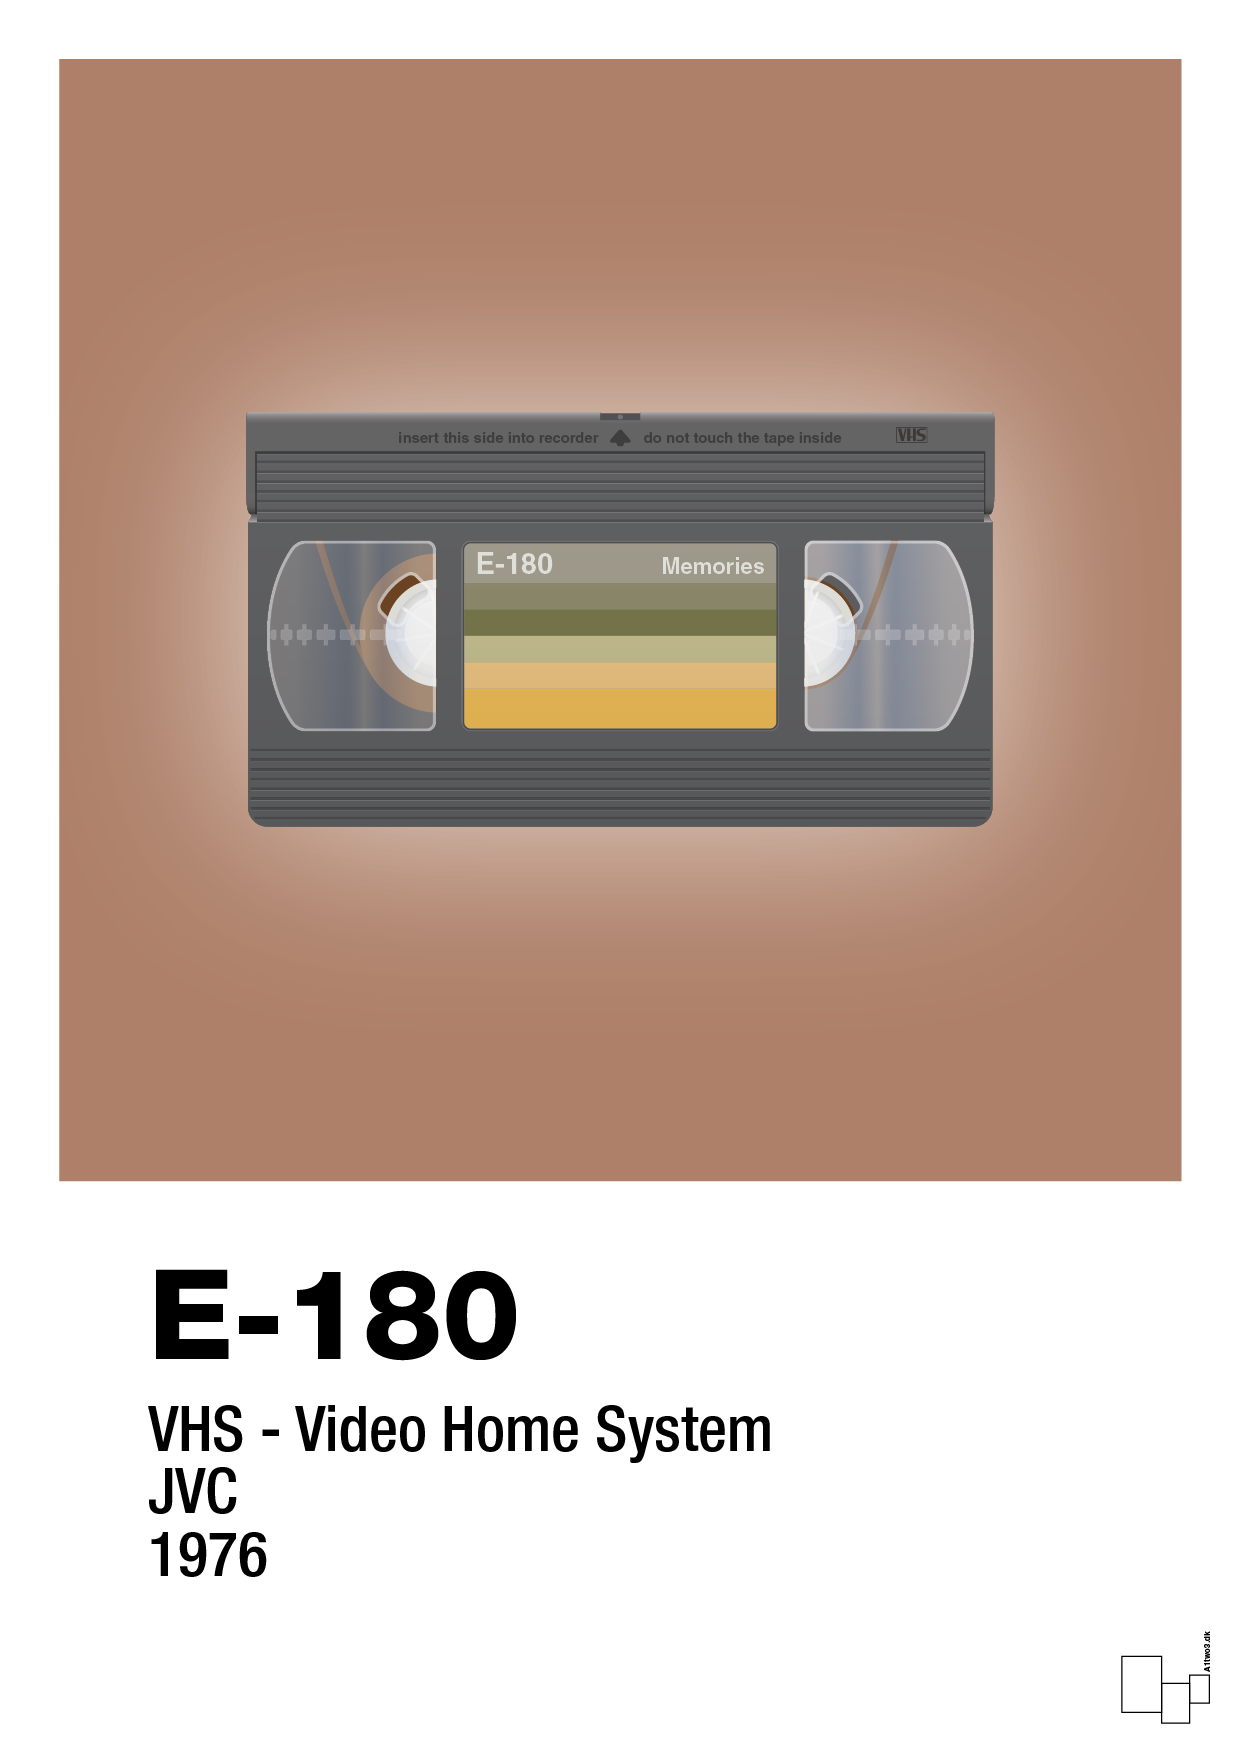 videobånd e-180 - Plakat med Grafik i Cider Spice